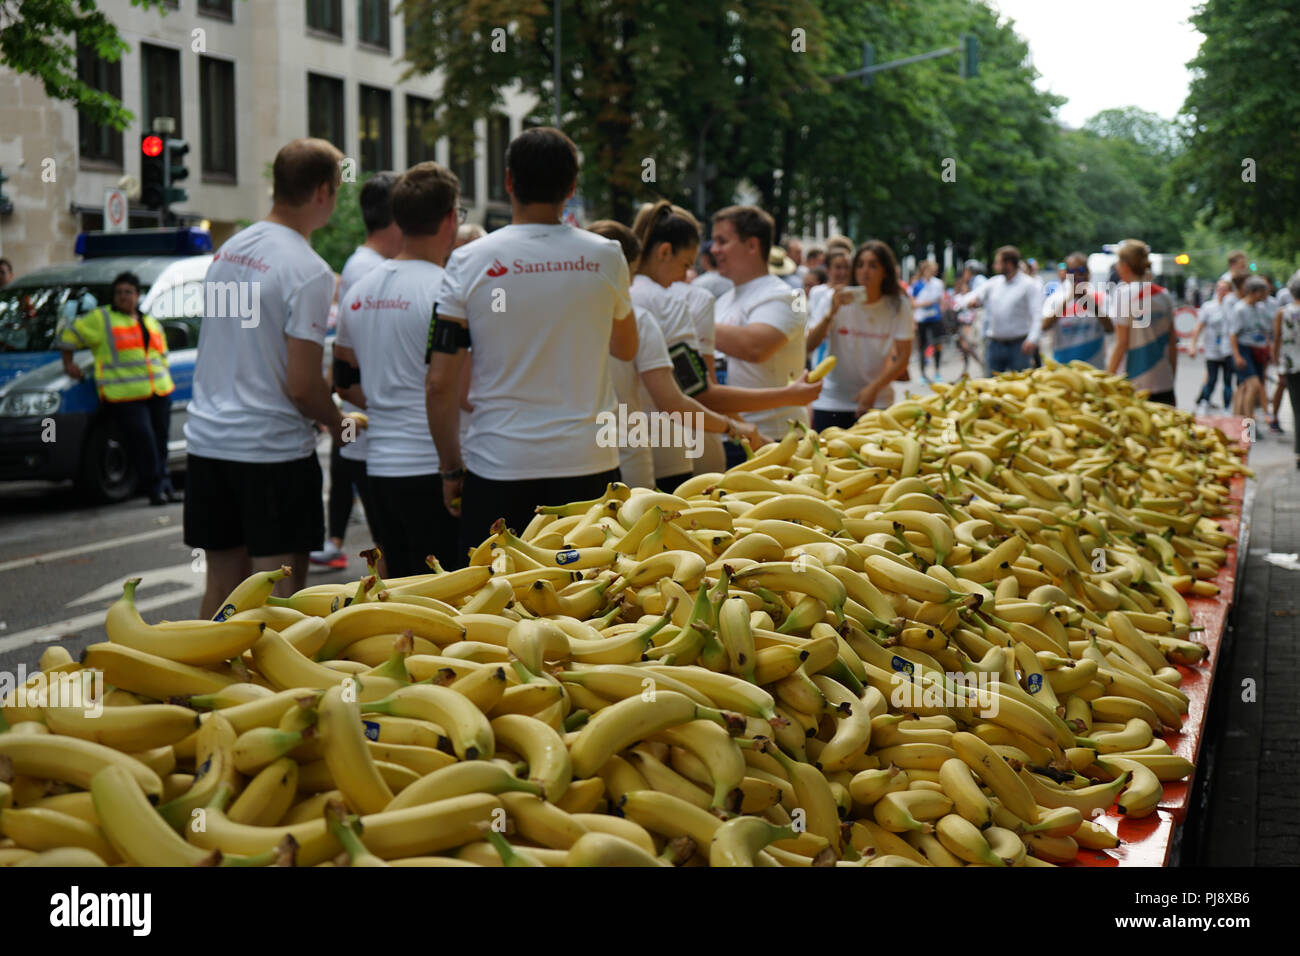 Frankfurter Firmenlauf, J.P. Morgan Corporate Challenge, Bananen beim JP Morgan Lauf am 7. Juni 2018 Frankfurt, Deutschland, Europa Banque D'Images